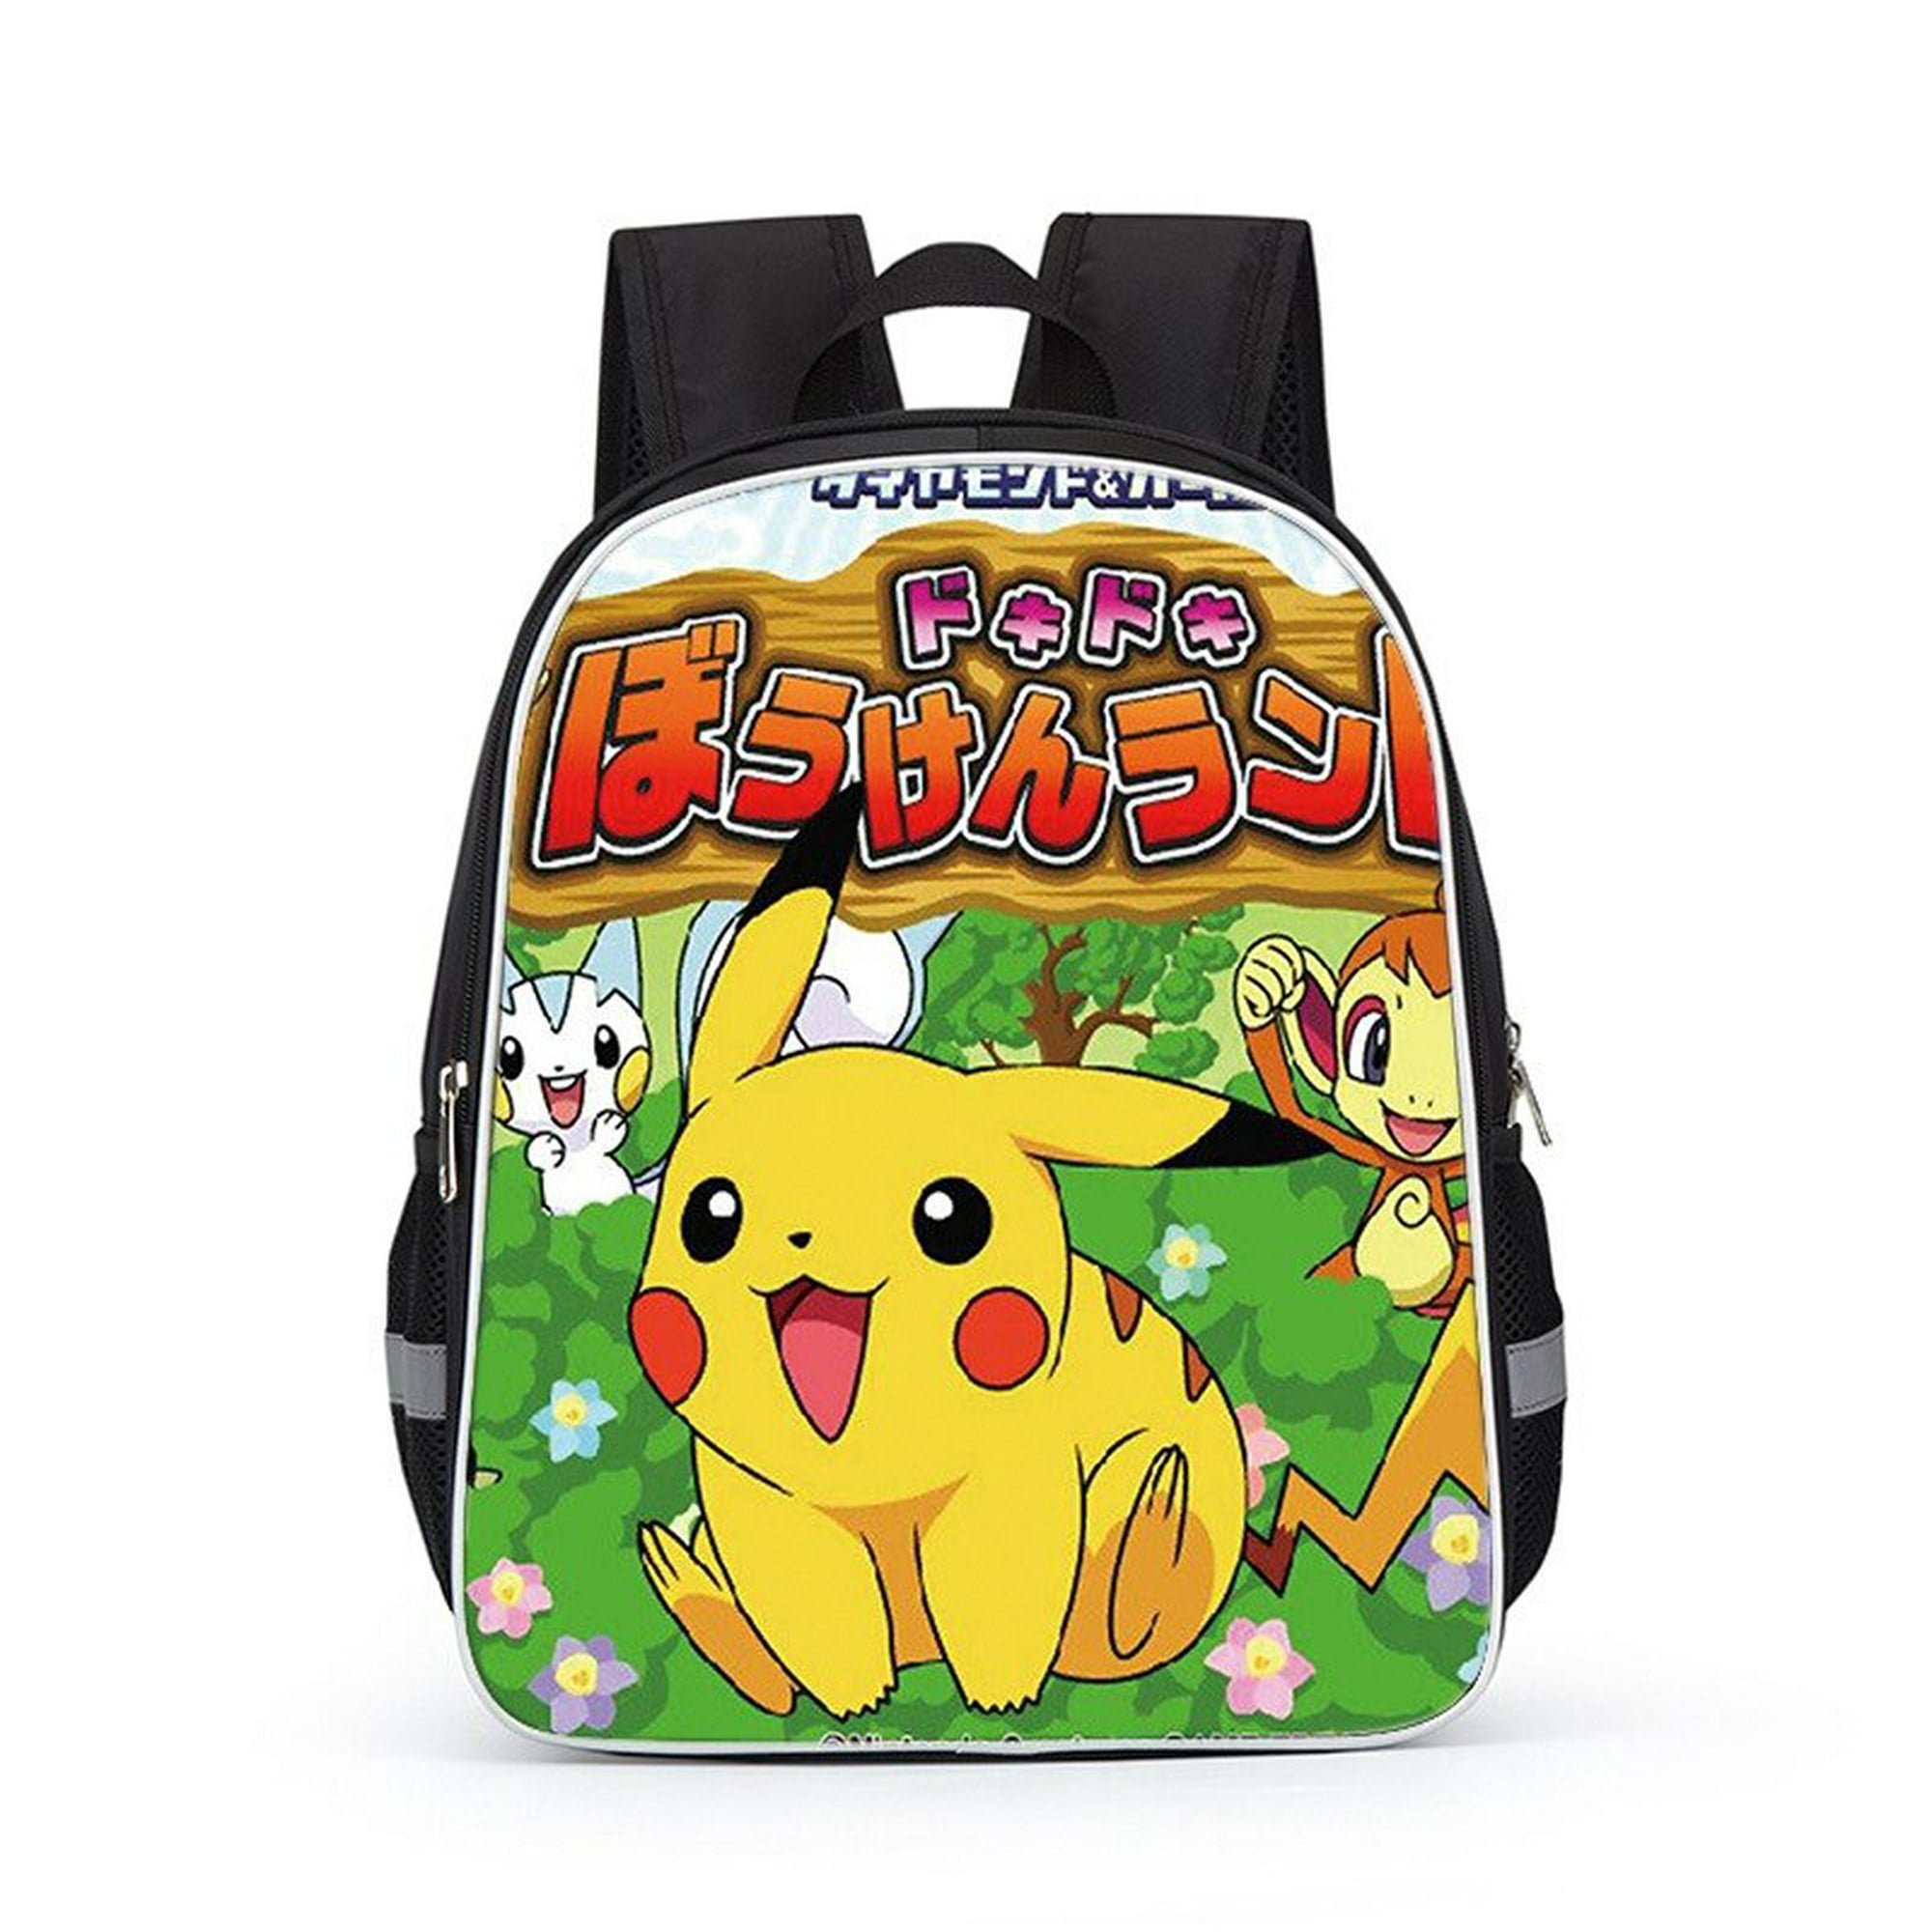 Mochila Pikachu estampado - Pokémon